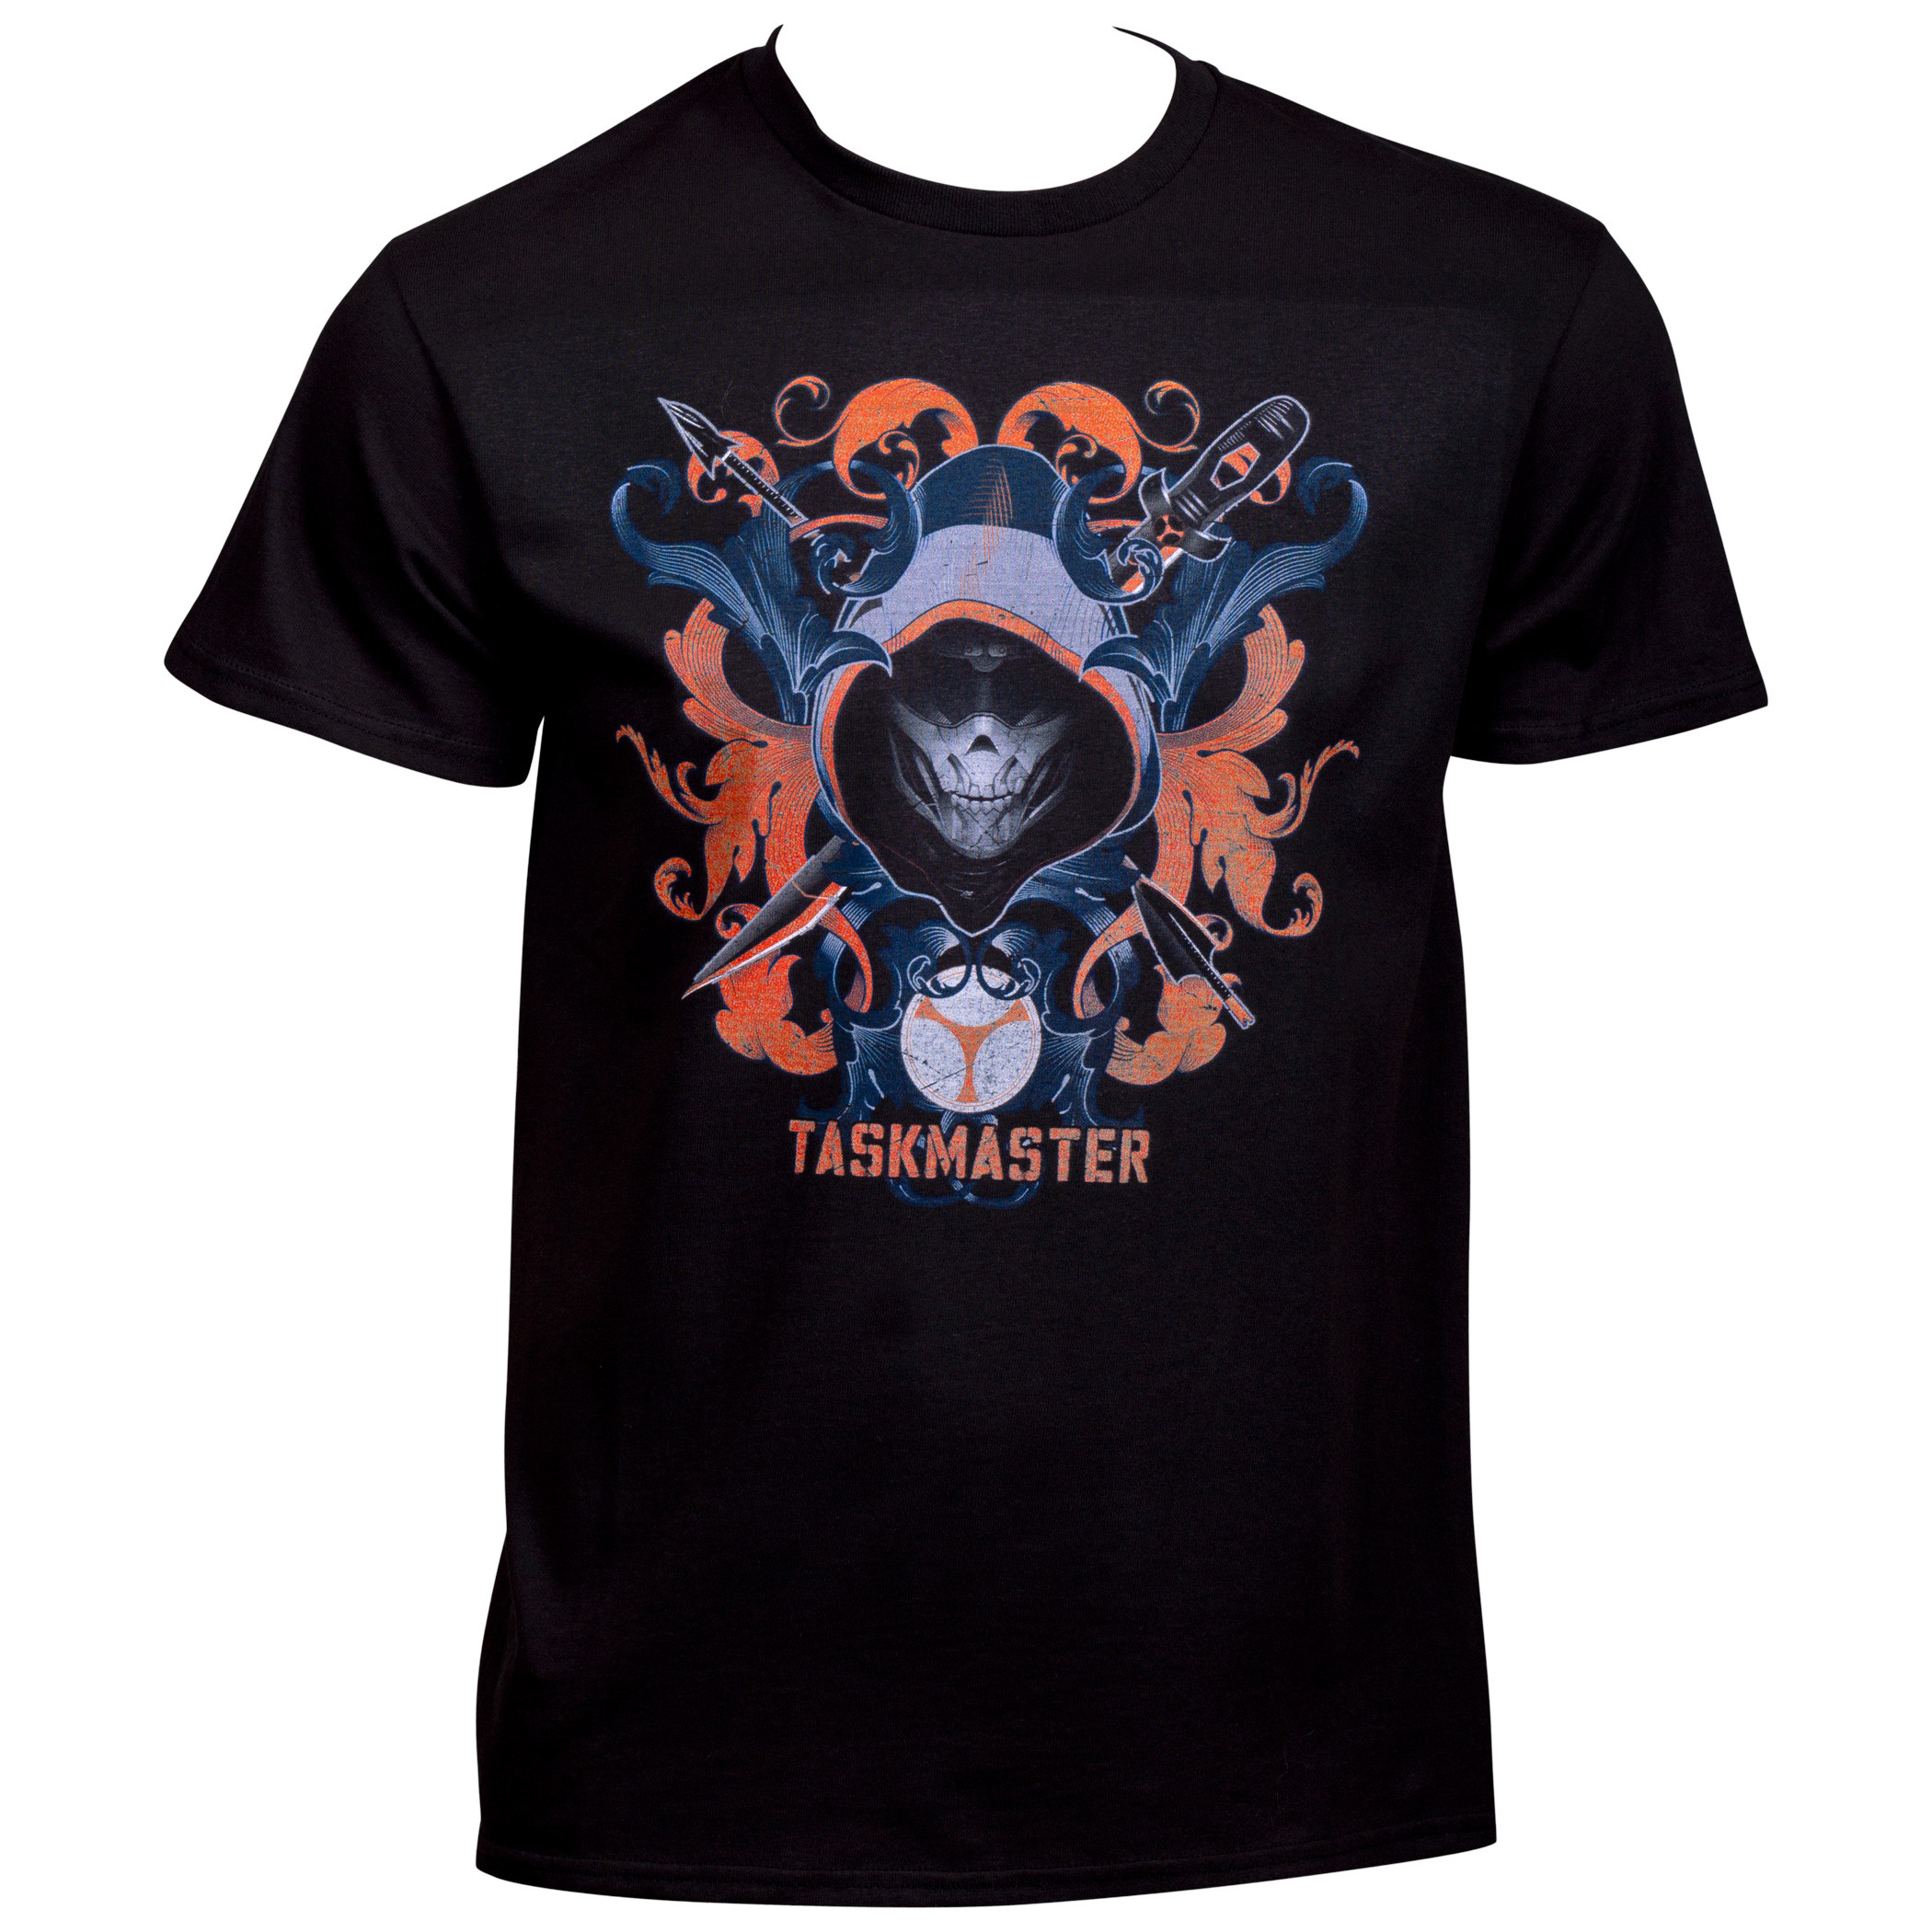 The Taskmaster Crossed Weapons Black Widow Movie T-Shirt